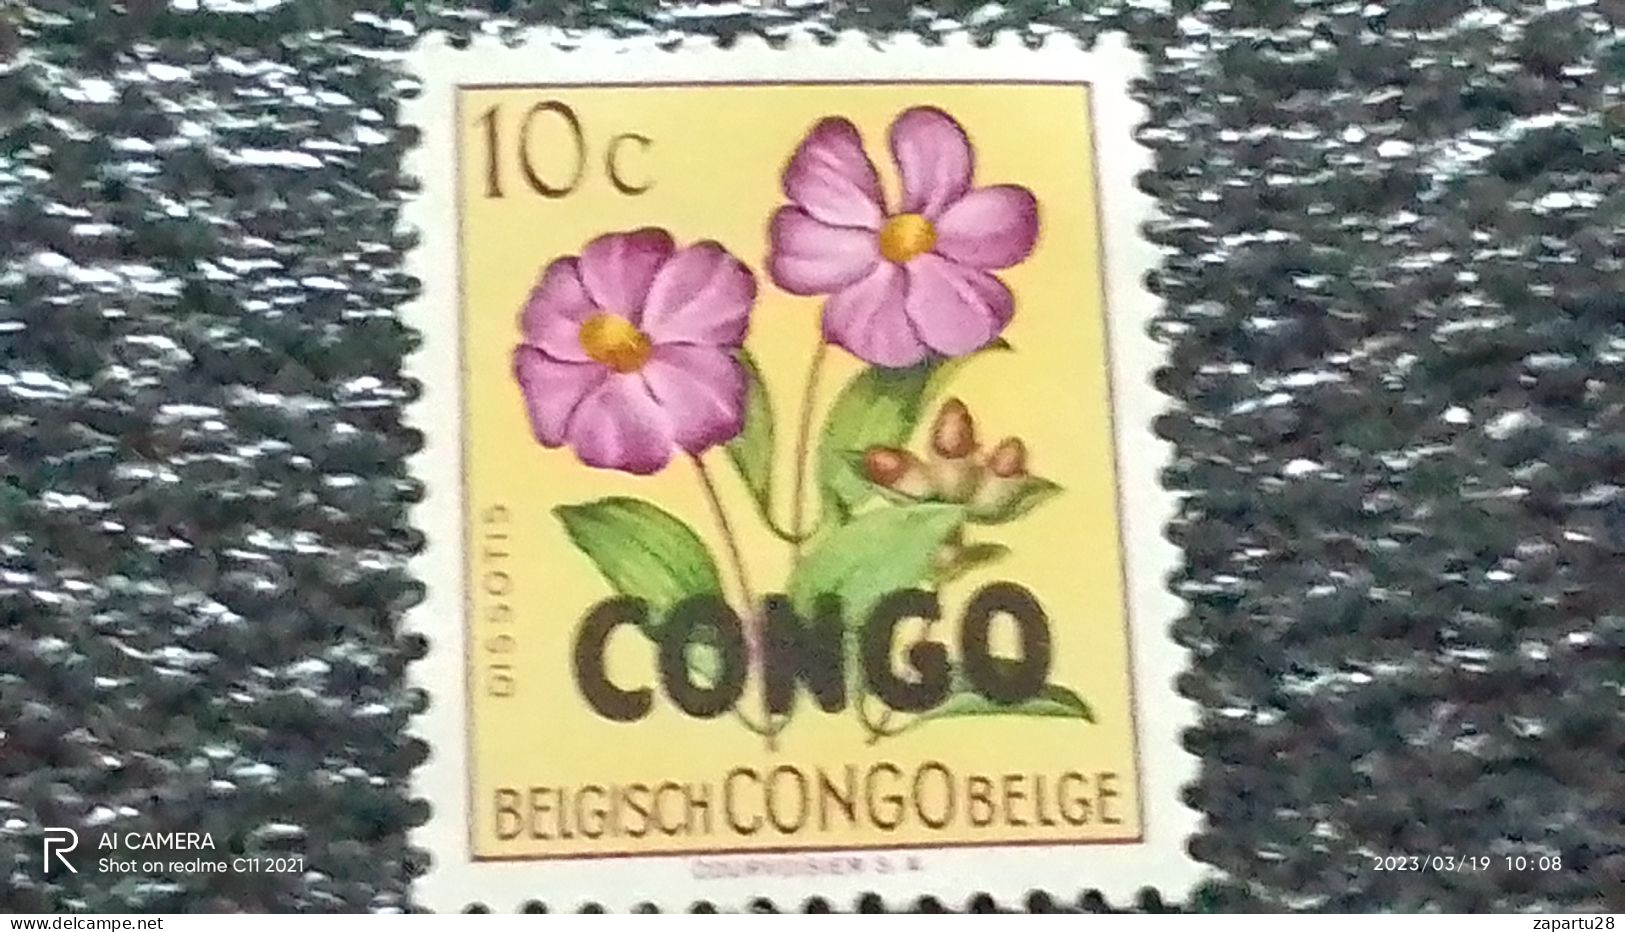 KONGO HALK CUMHURİYETİ-1960-70-      10C     USED - Usados